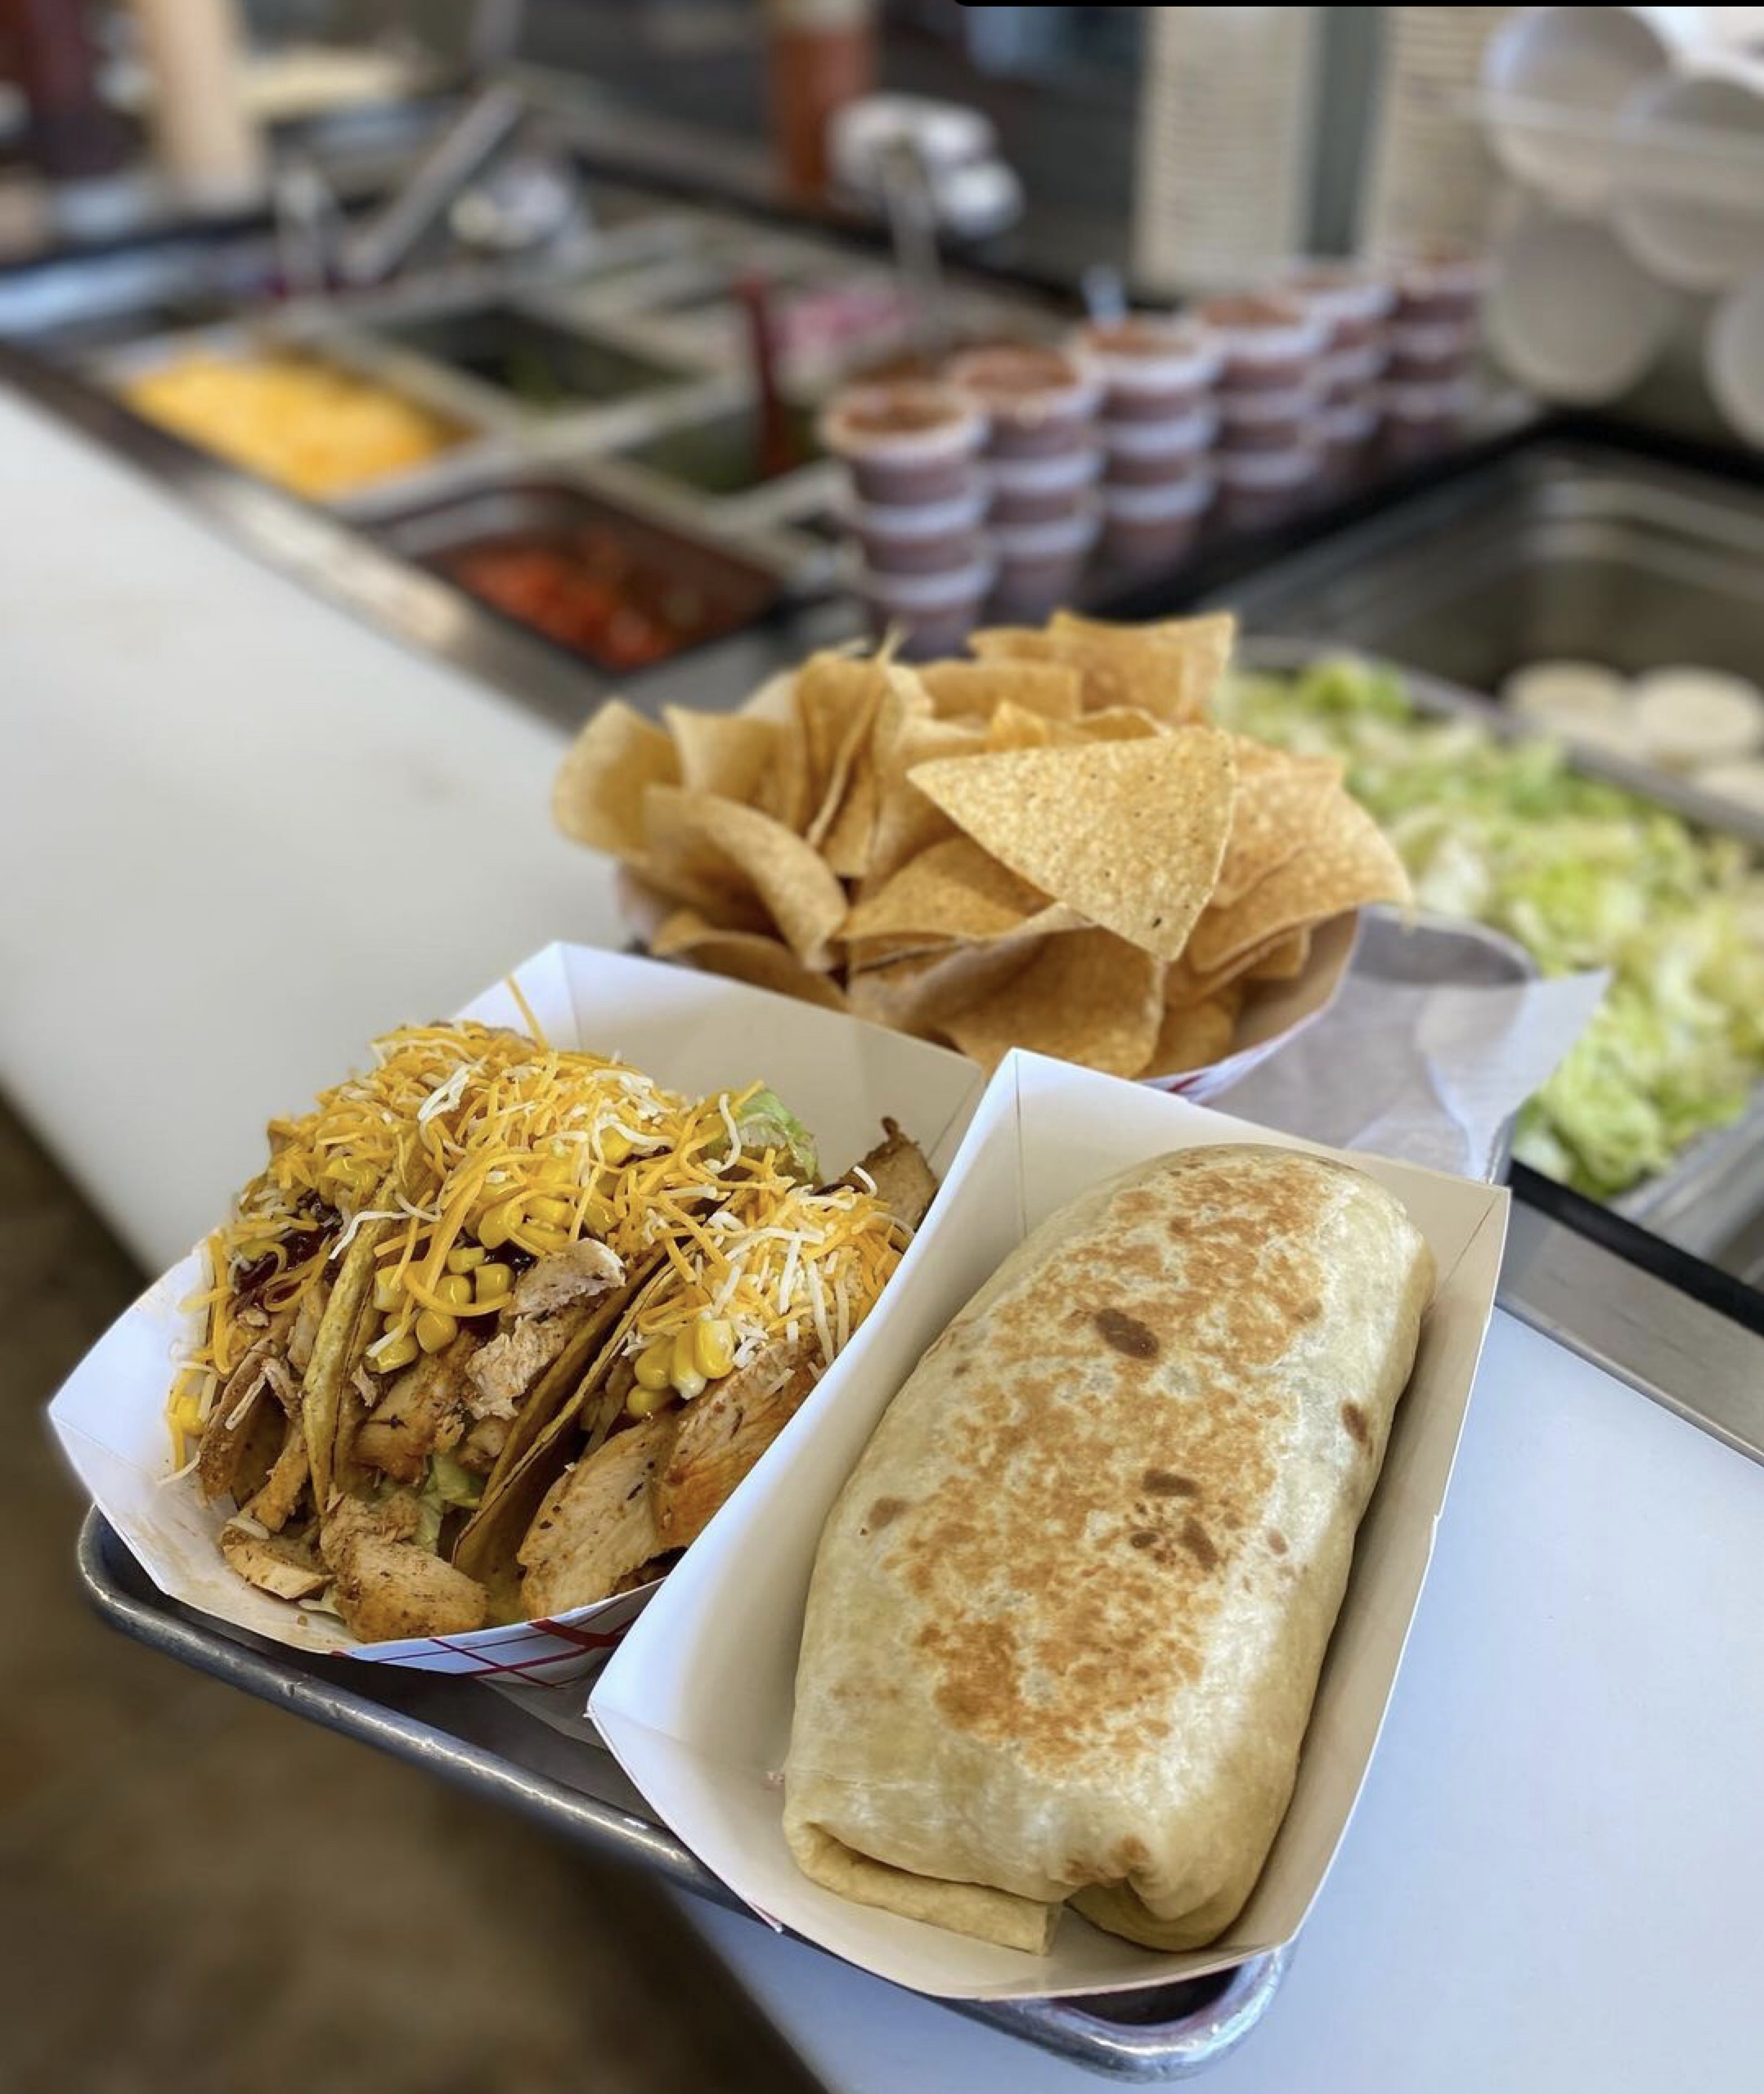 A tray of delicious tacos, nachos and a burrito.